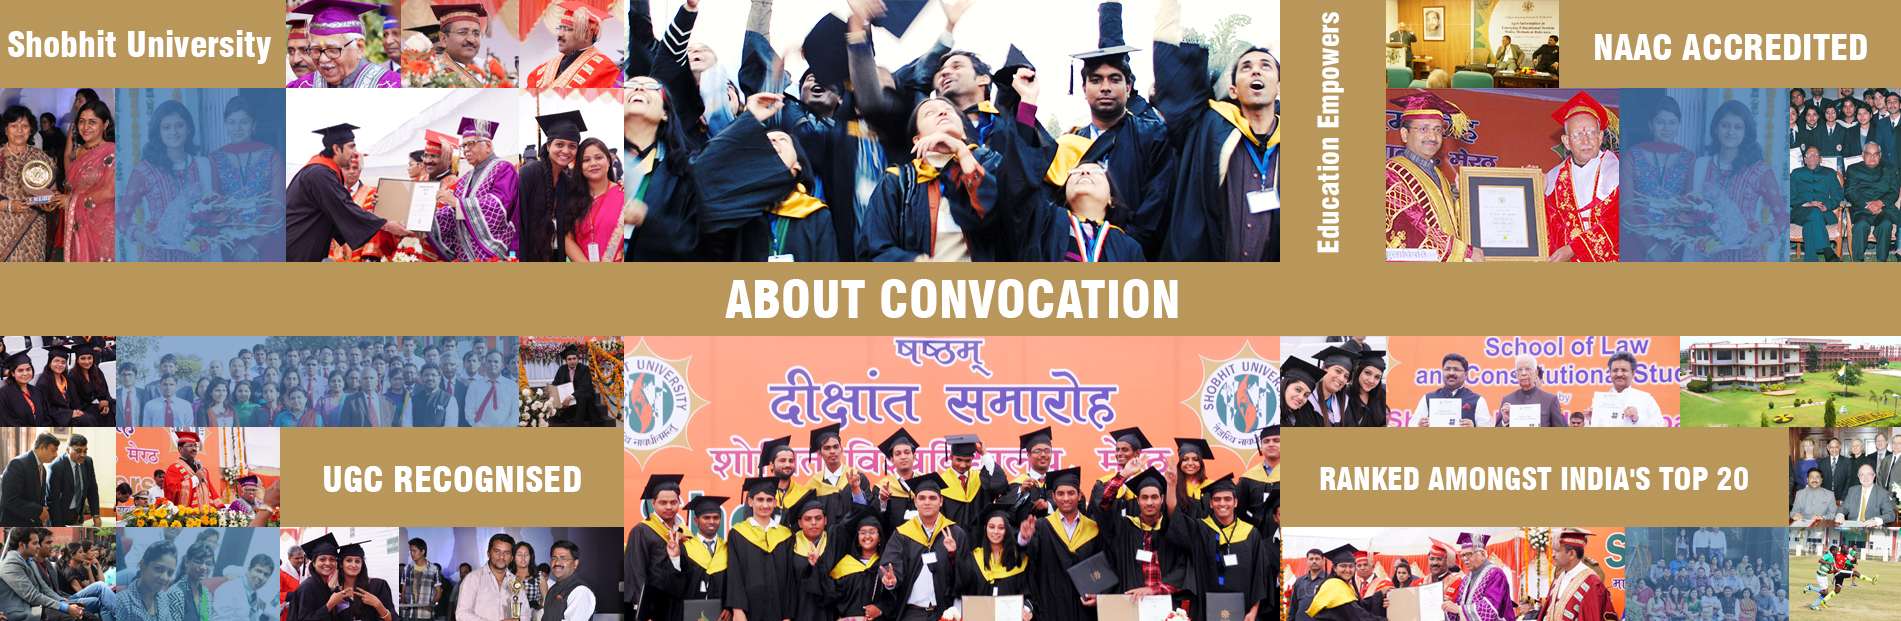 About Convocation Shobhit University